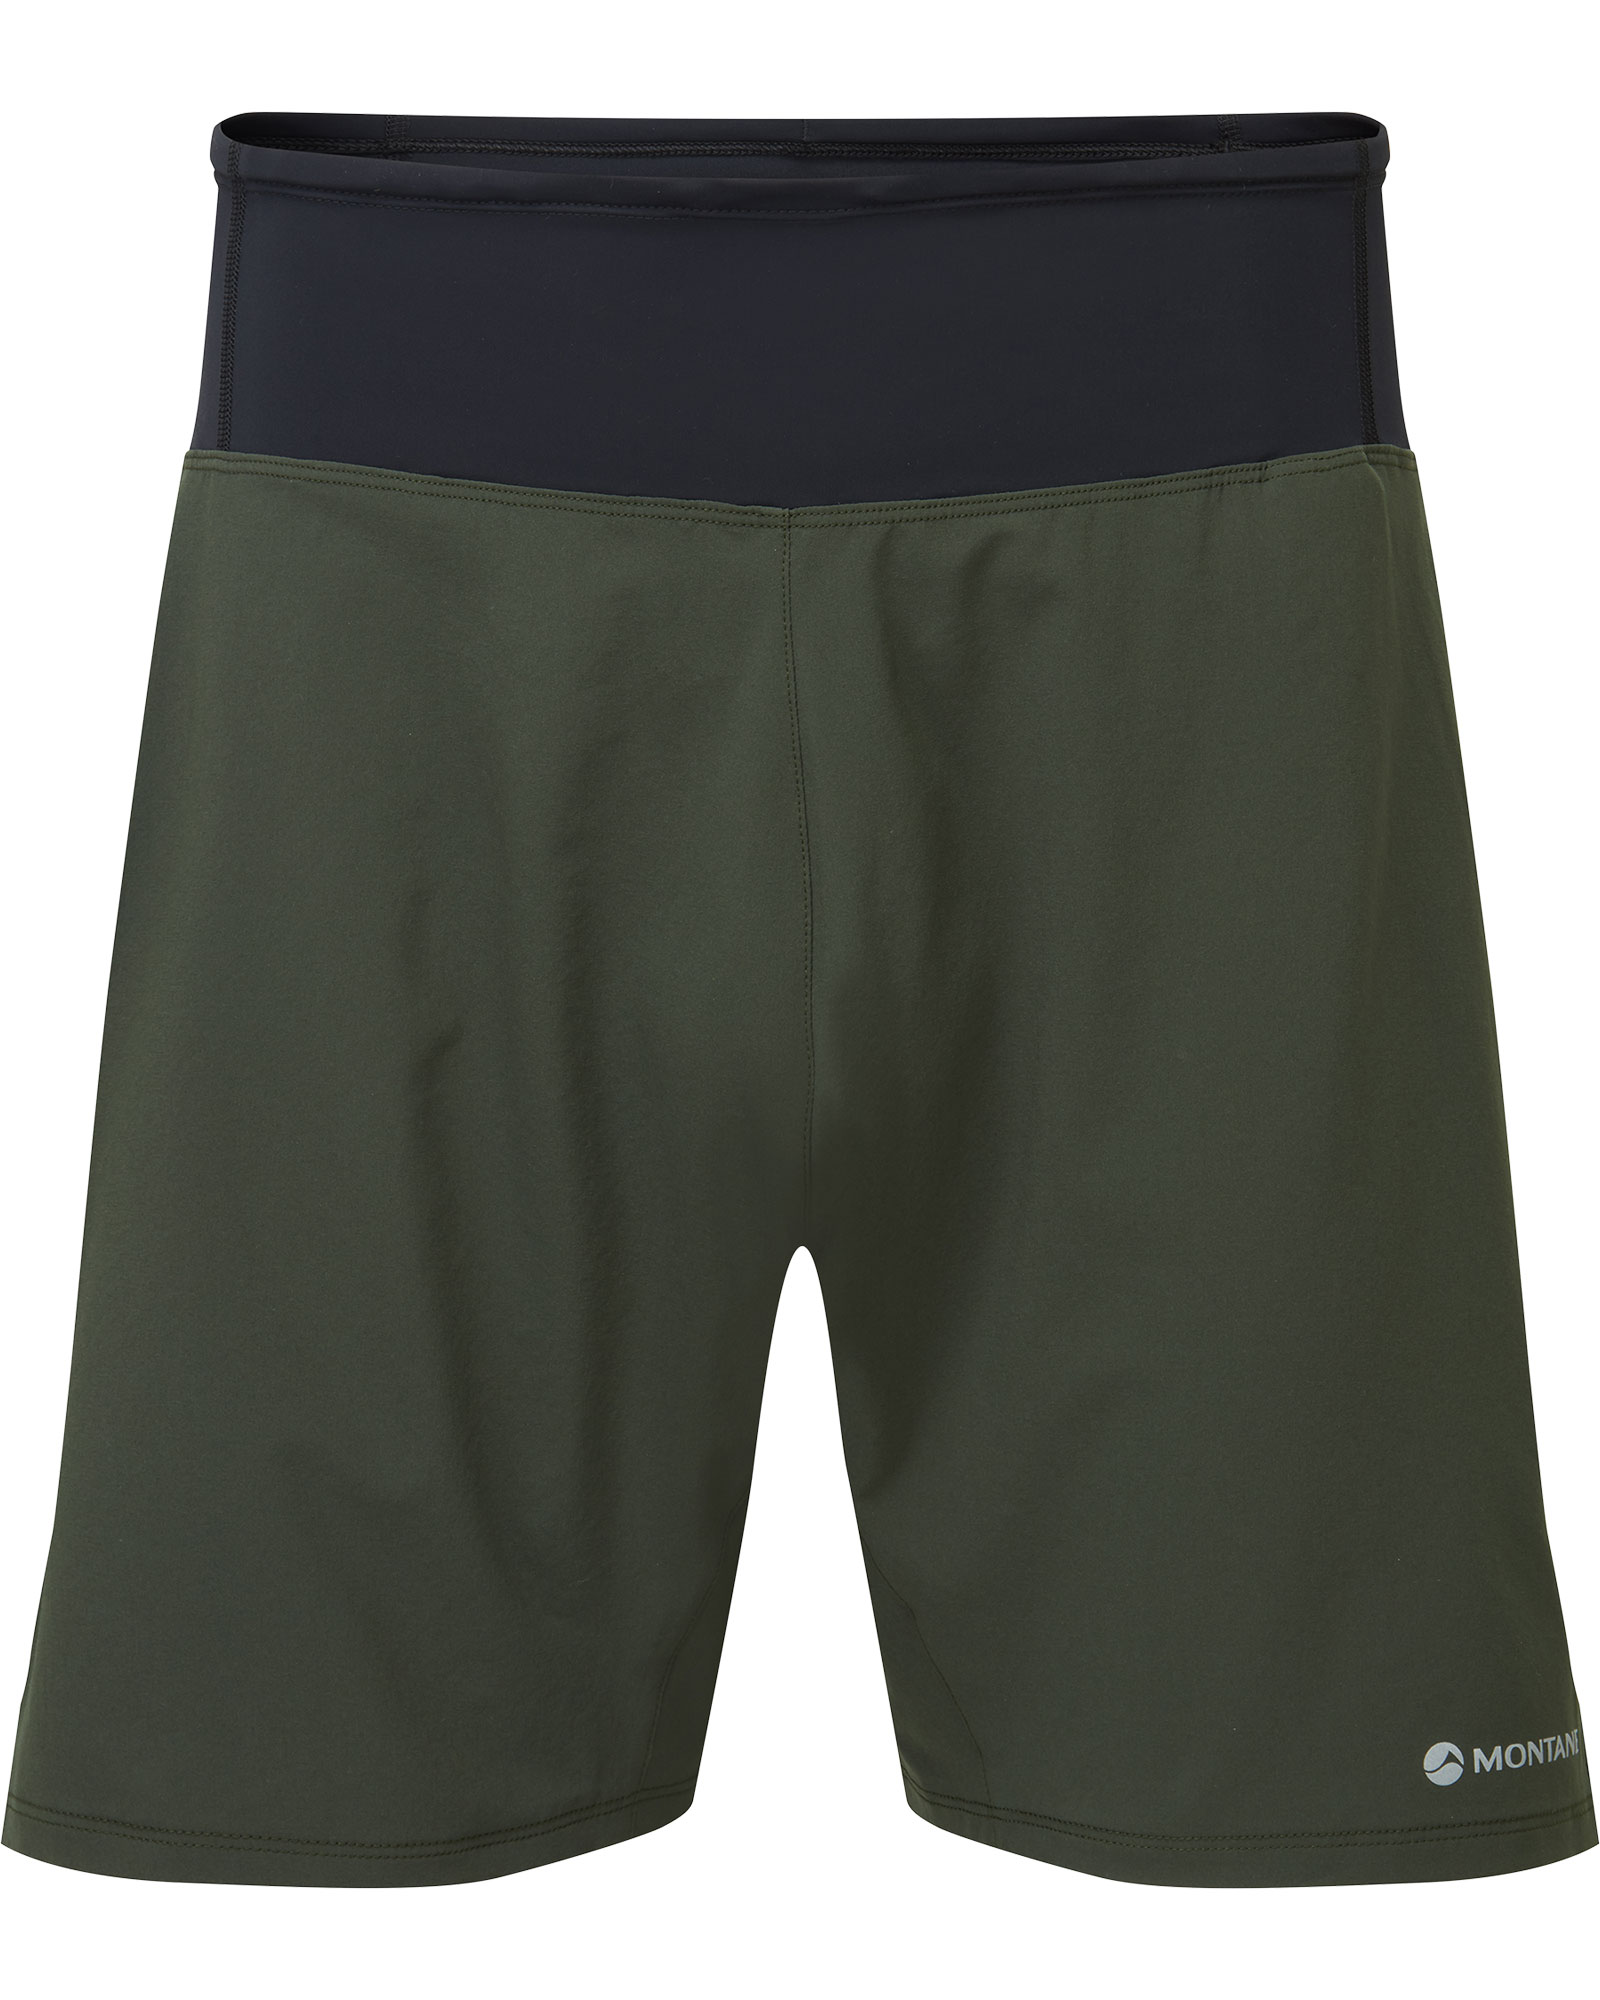 Montane Slipstream Men’s 7" Shorts - Oak Green L